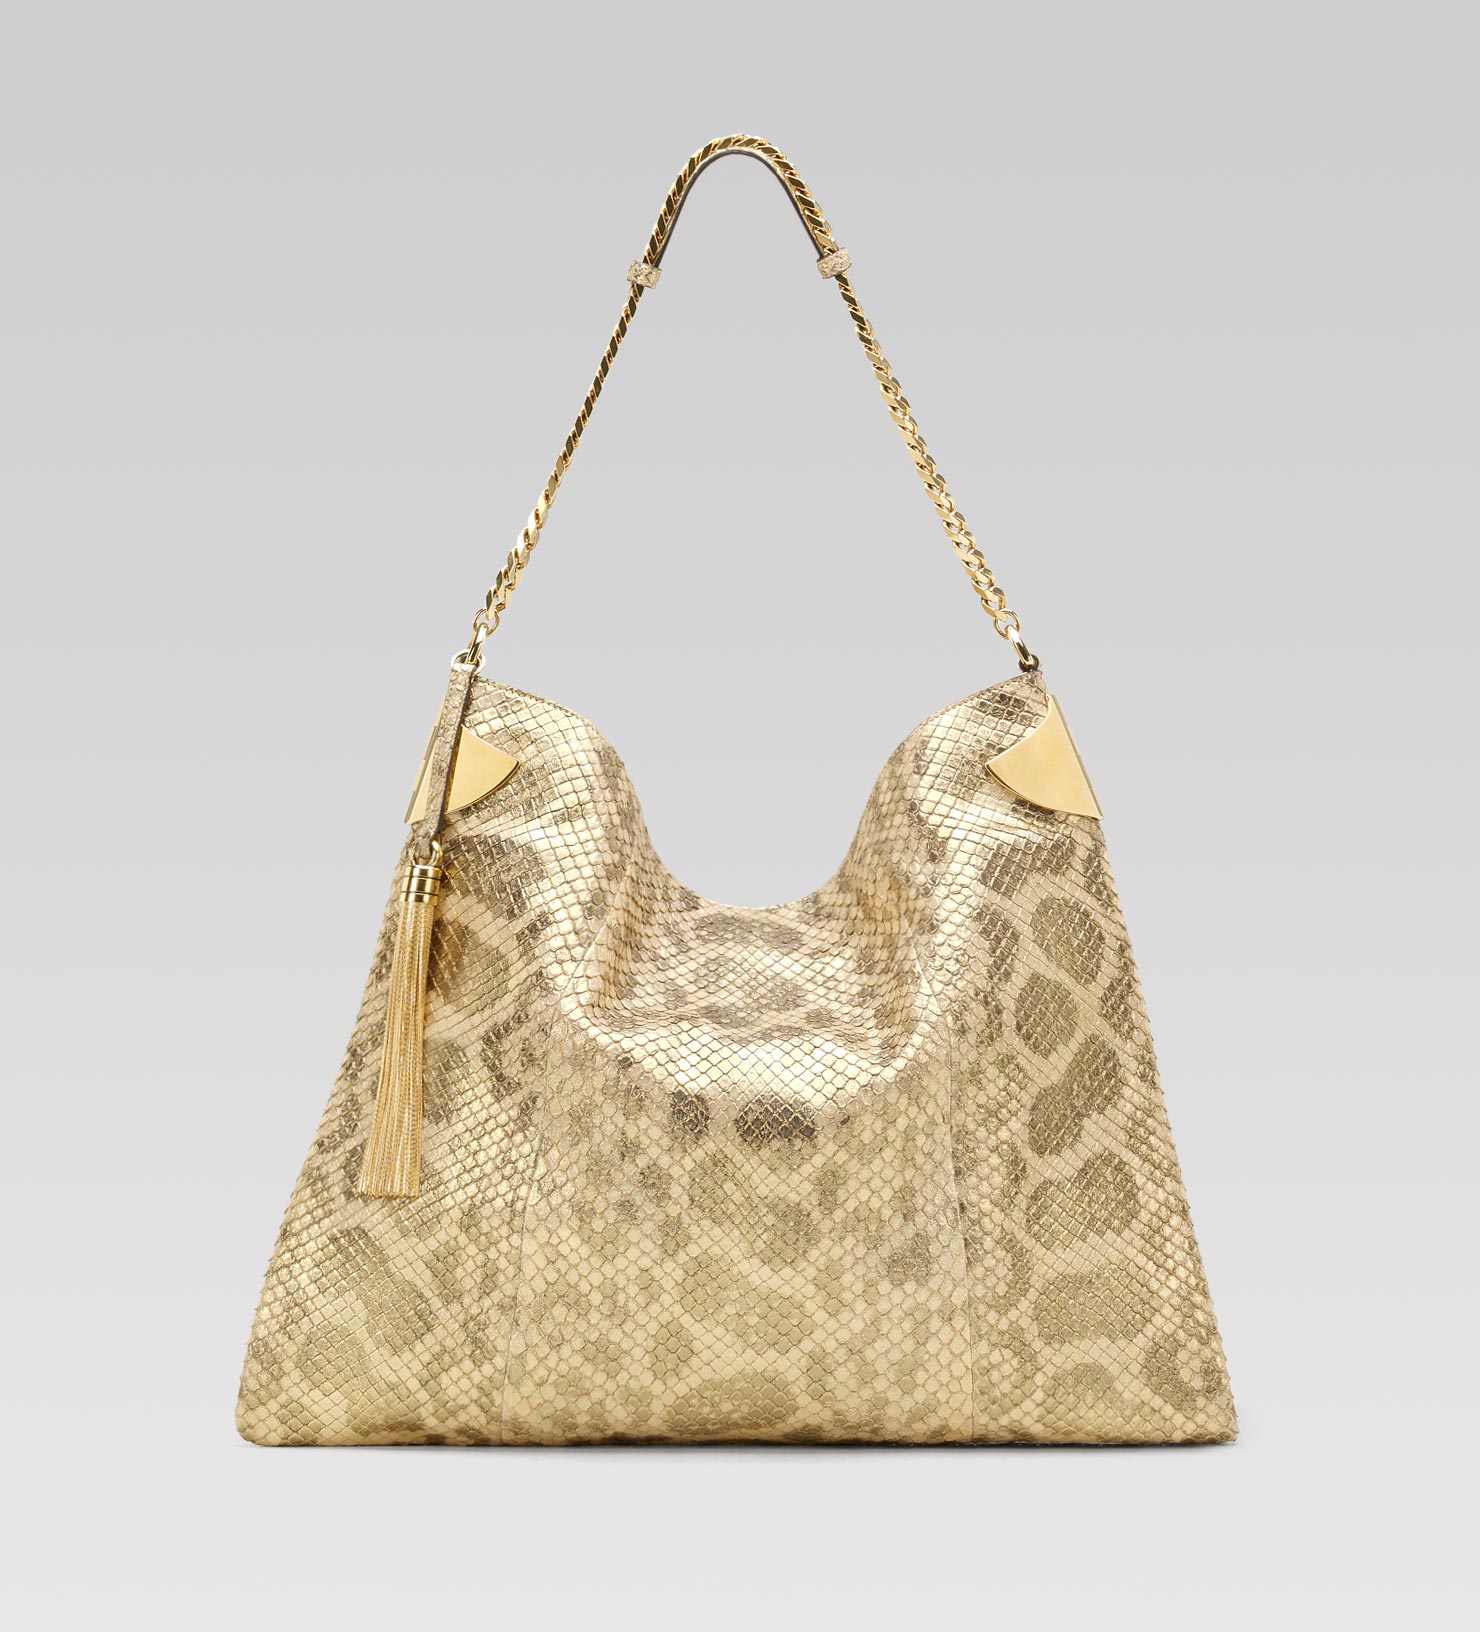 Lyst - Gucci Gucci Shoulder Bag in Metallic